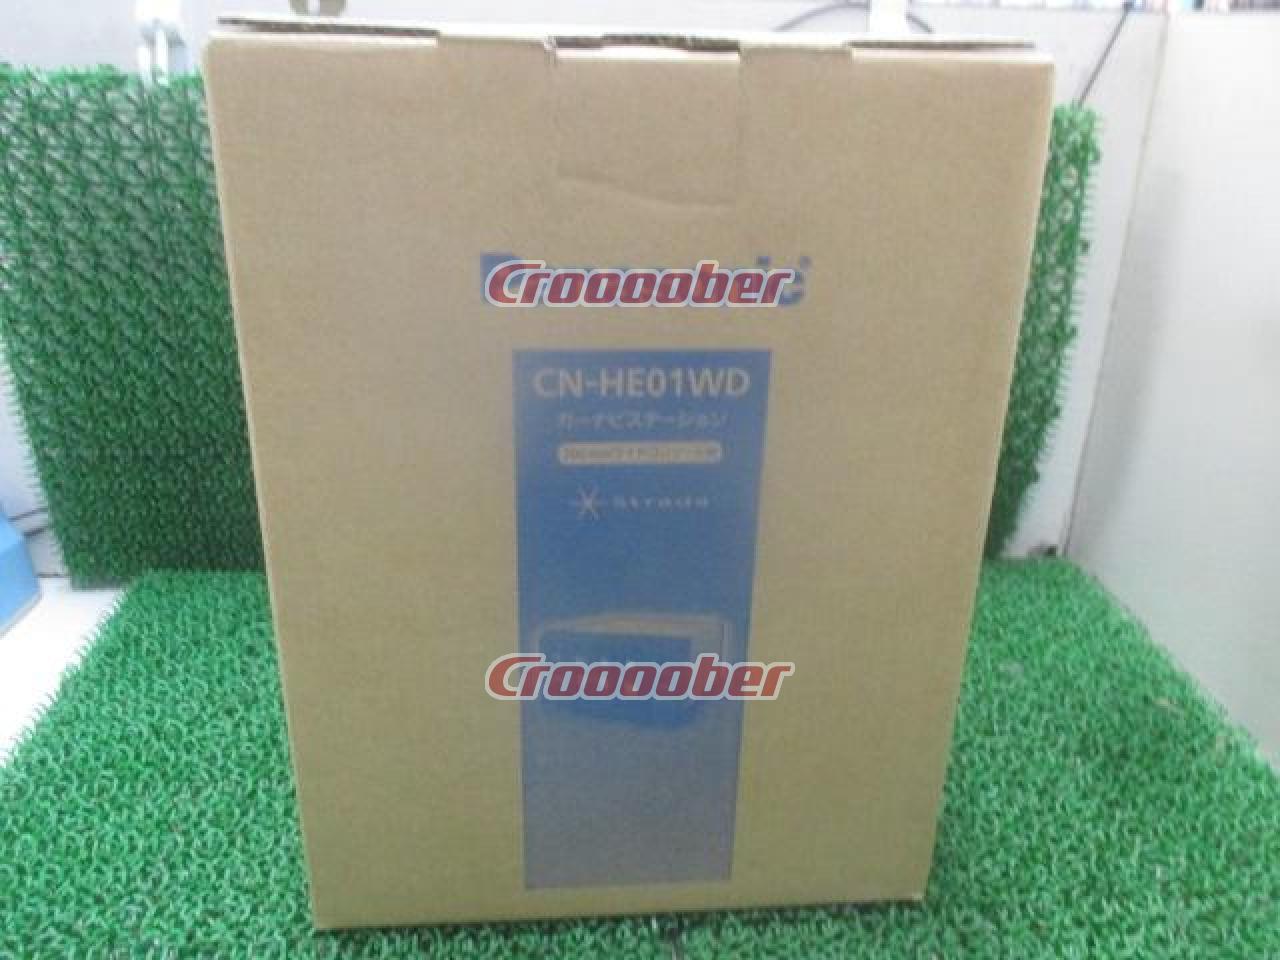 Panasonic CN-HE01WD | Memory Navigation(digital) | Croooober